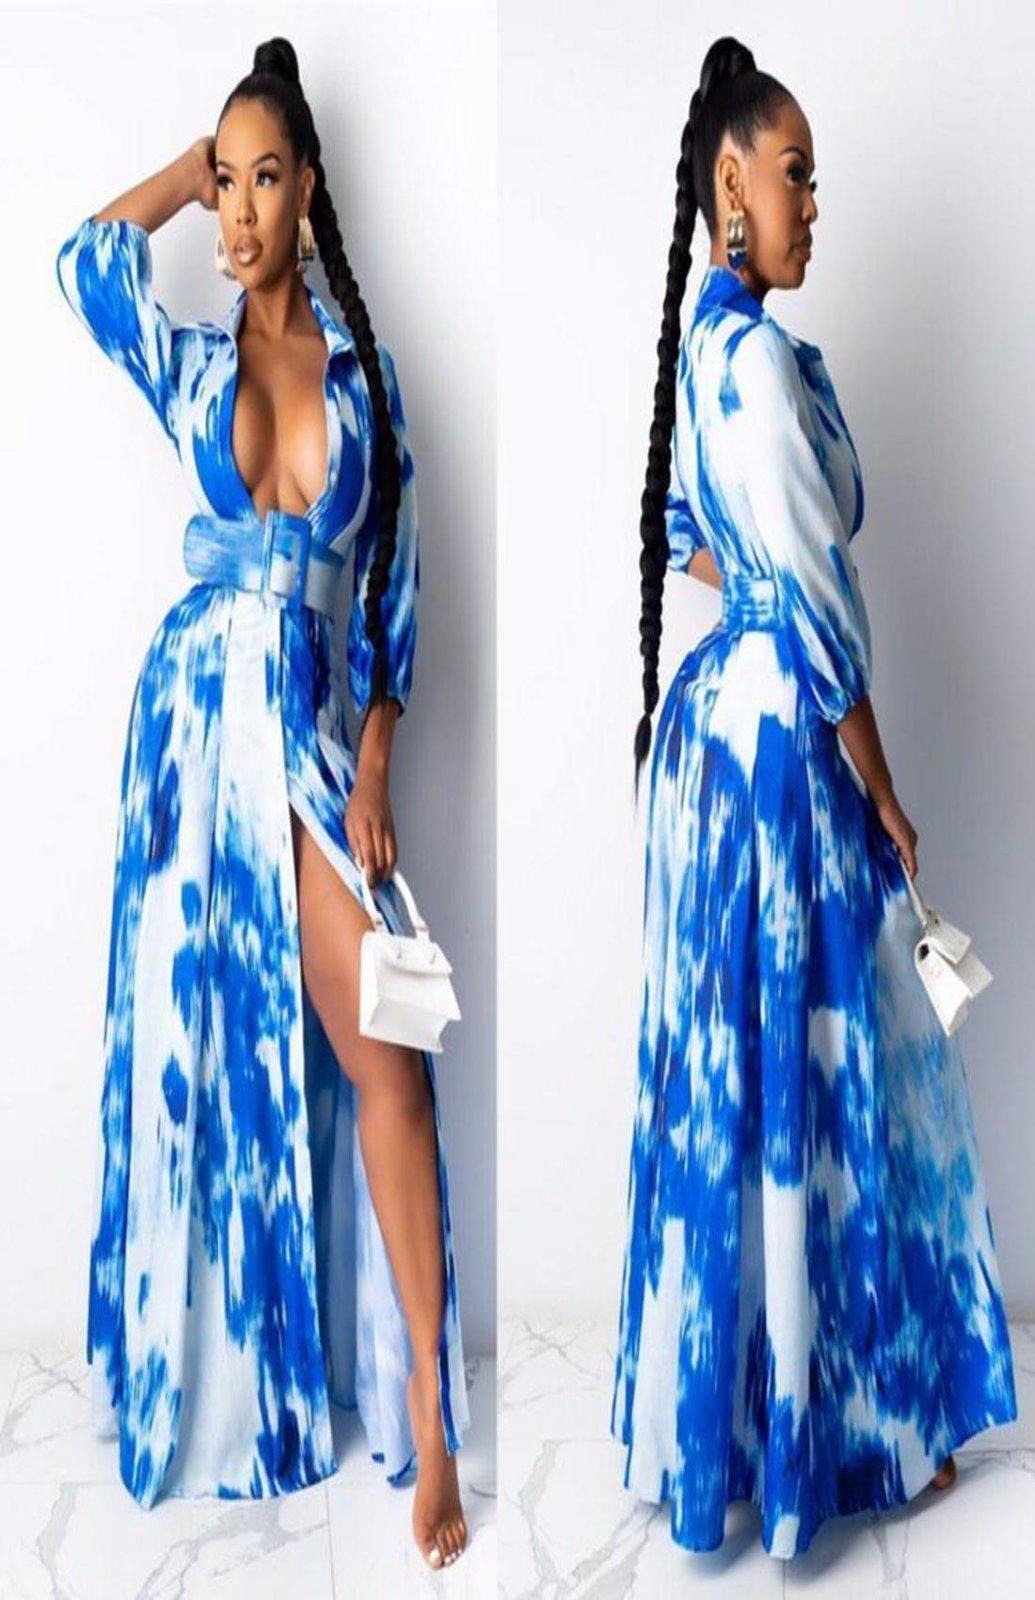 Shop Tie Dye Kimono Robes and Maxi Dresses for Women Online